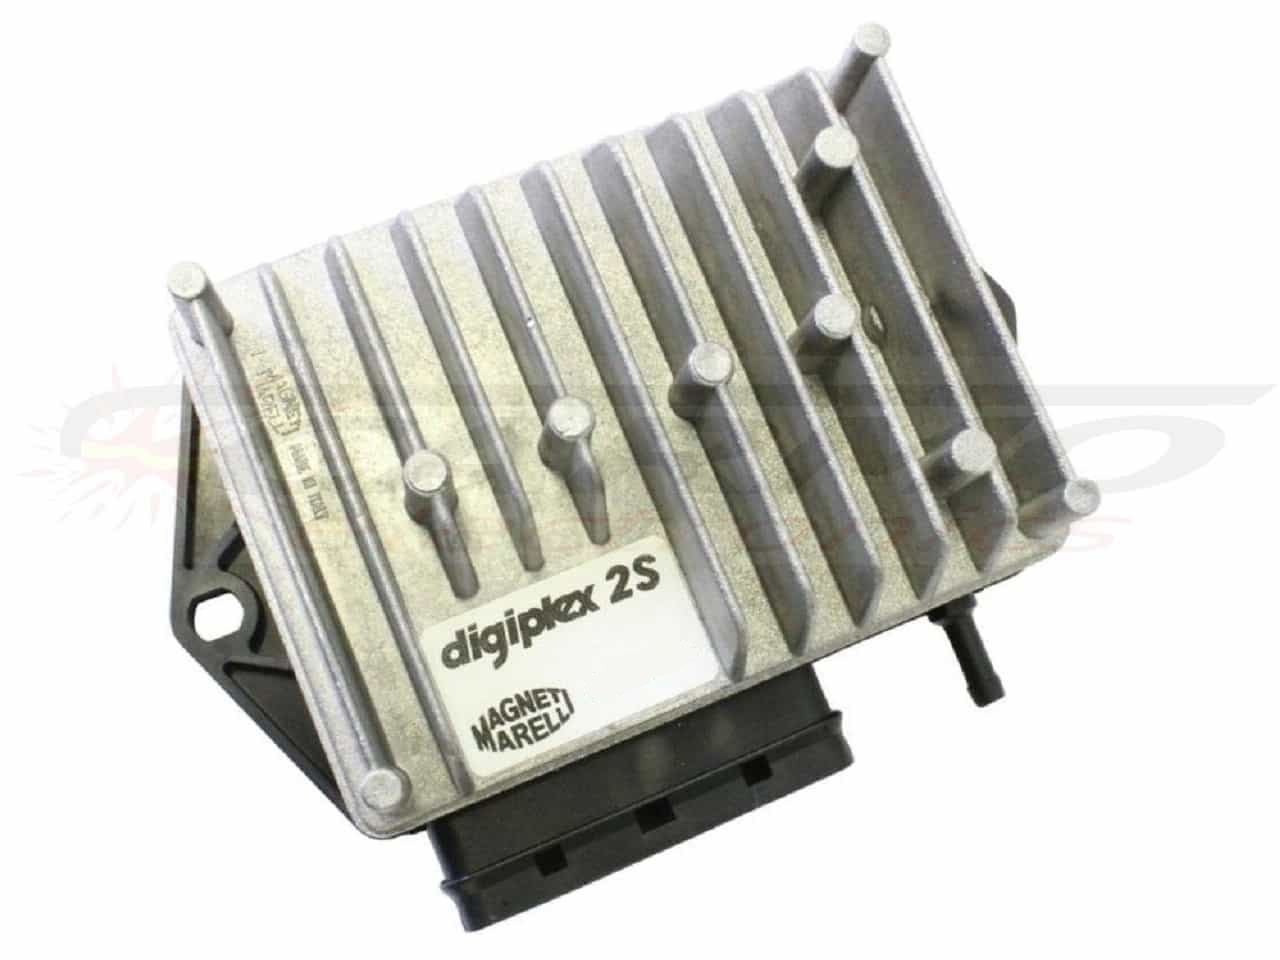 1100 CALIFORNIA 3 igniter ignition module CDI TCI Box (Magneti Marelli, Digiplex 2S,MED500A, MED446A)